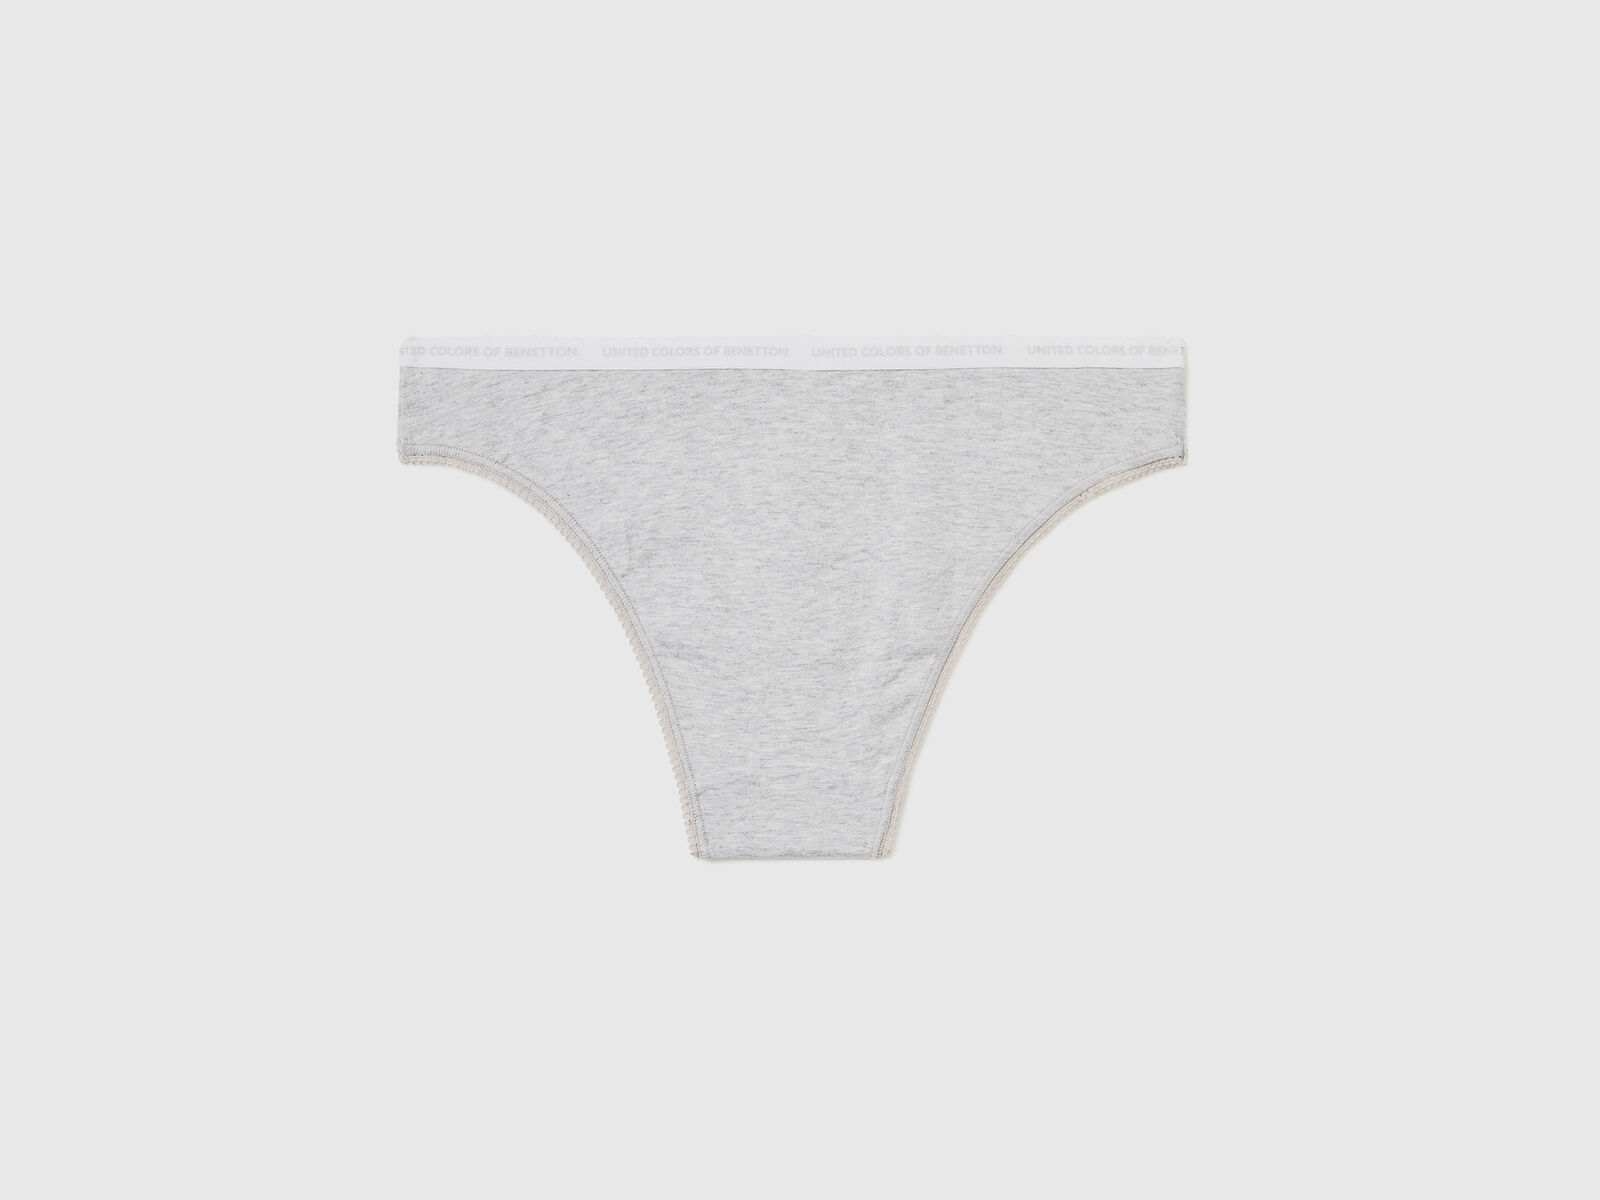 Engel organic cotton women's underwear, silver grey